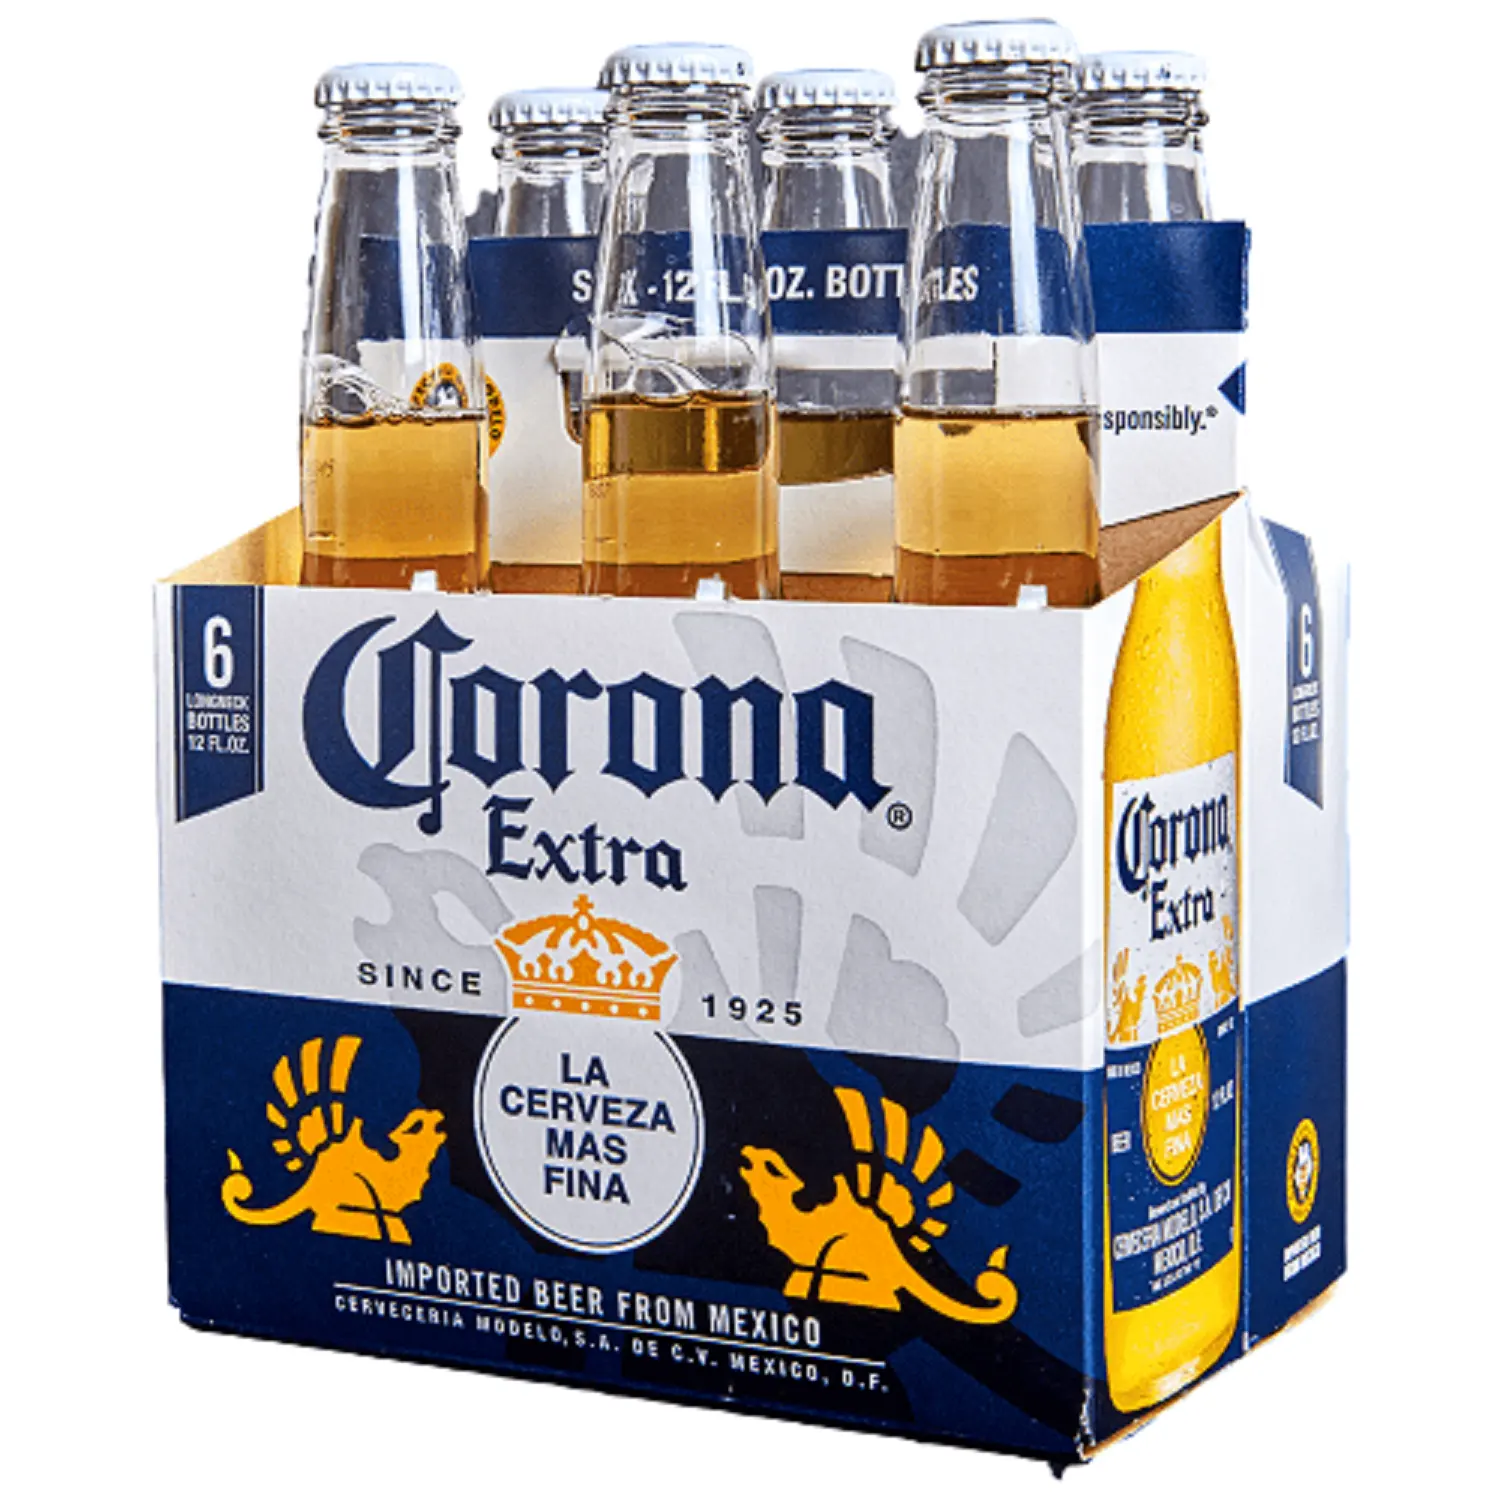 Wholesale Price C-orona Beer 330ml Bottles / C-orona Extra lager beer